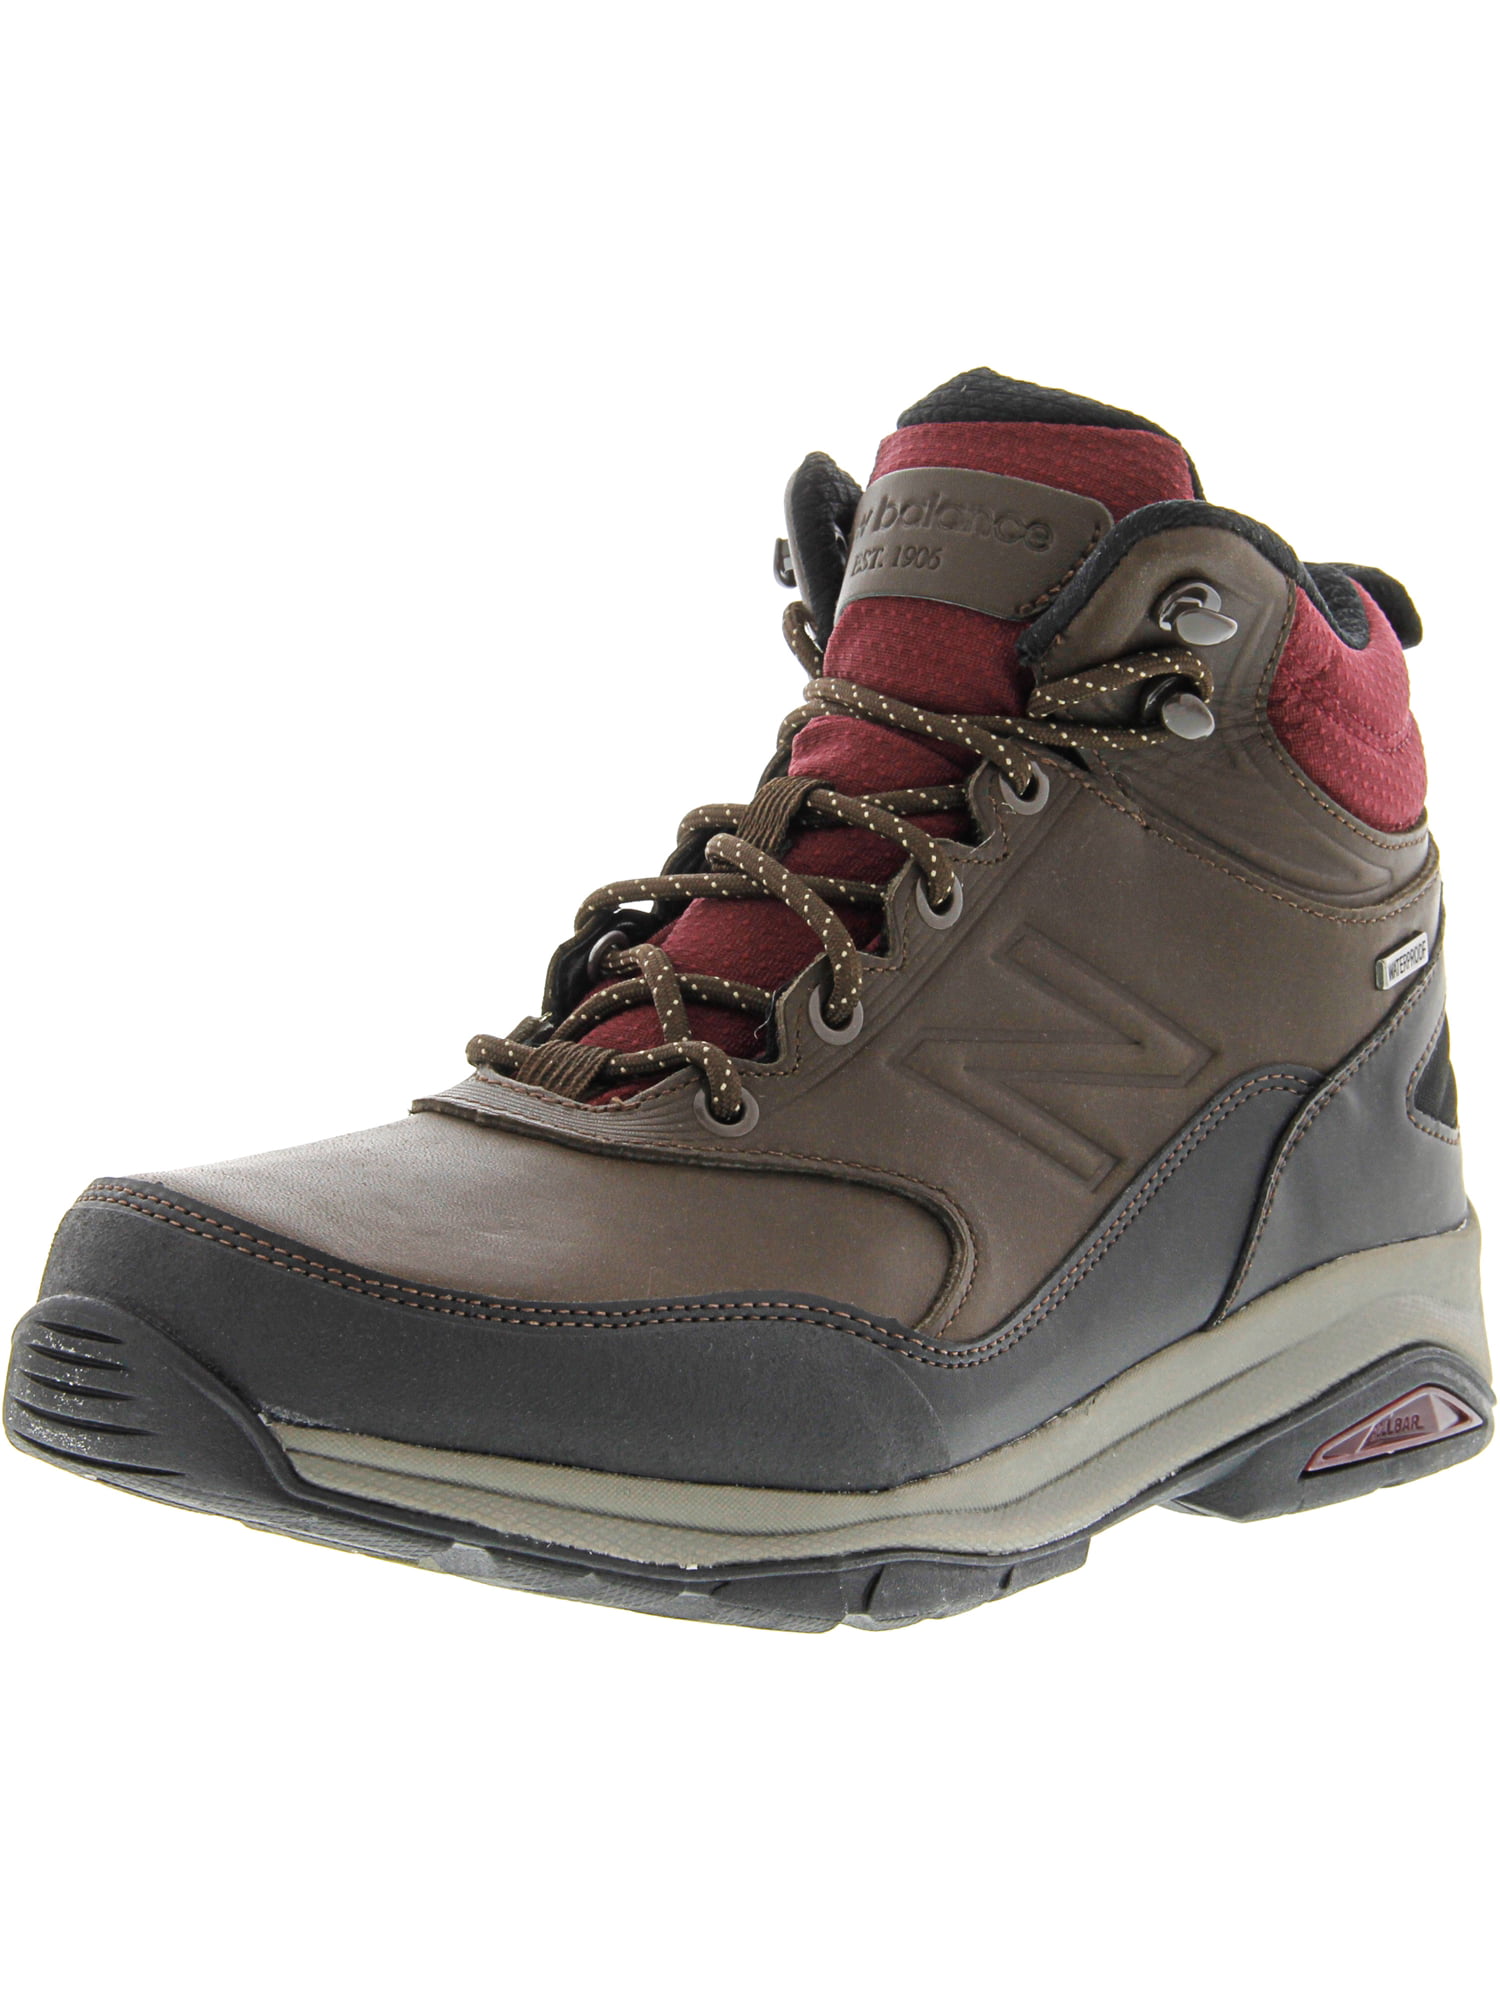 new balance hiking boots canada